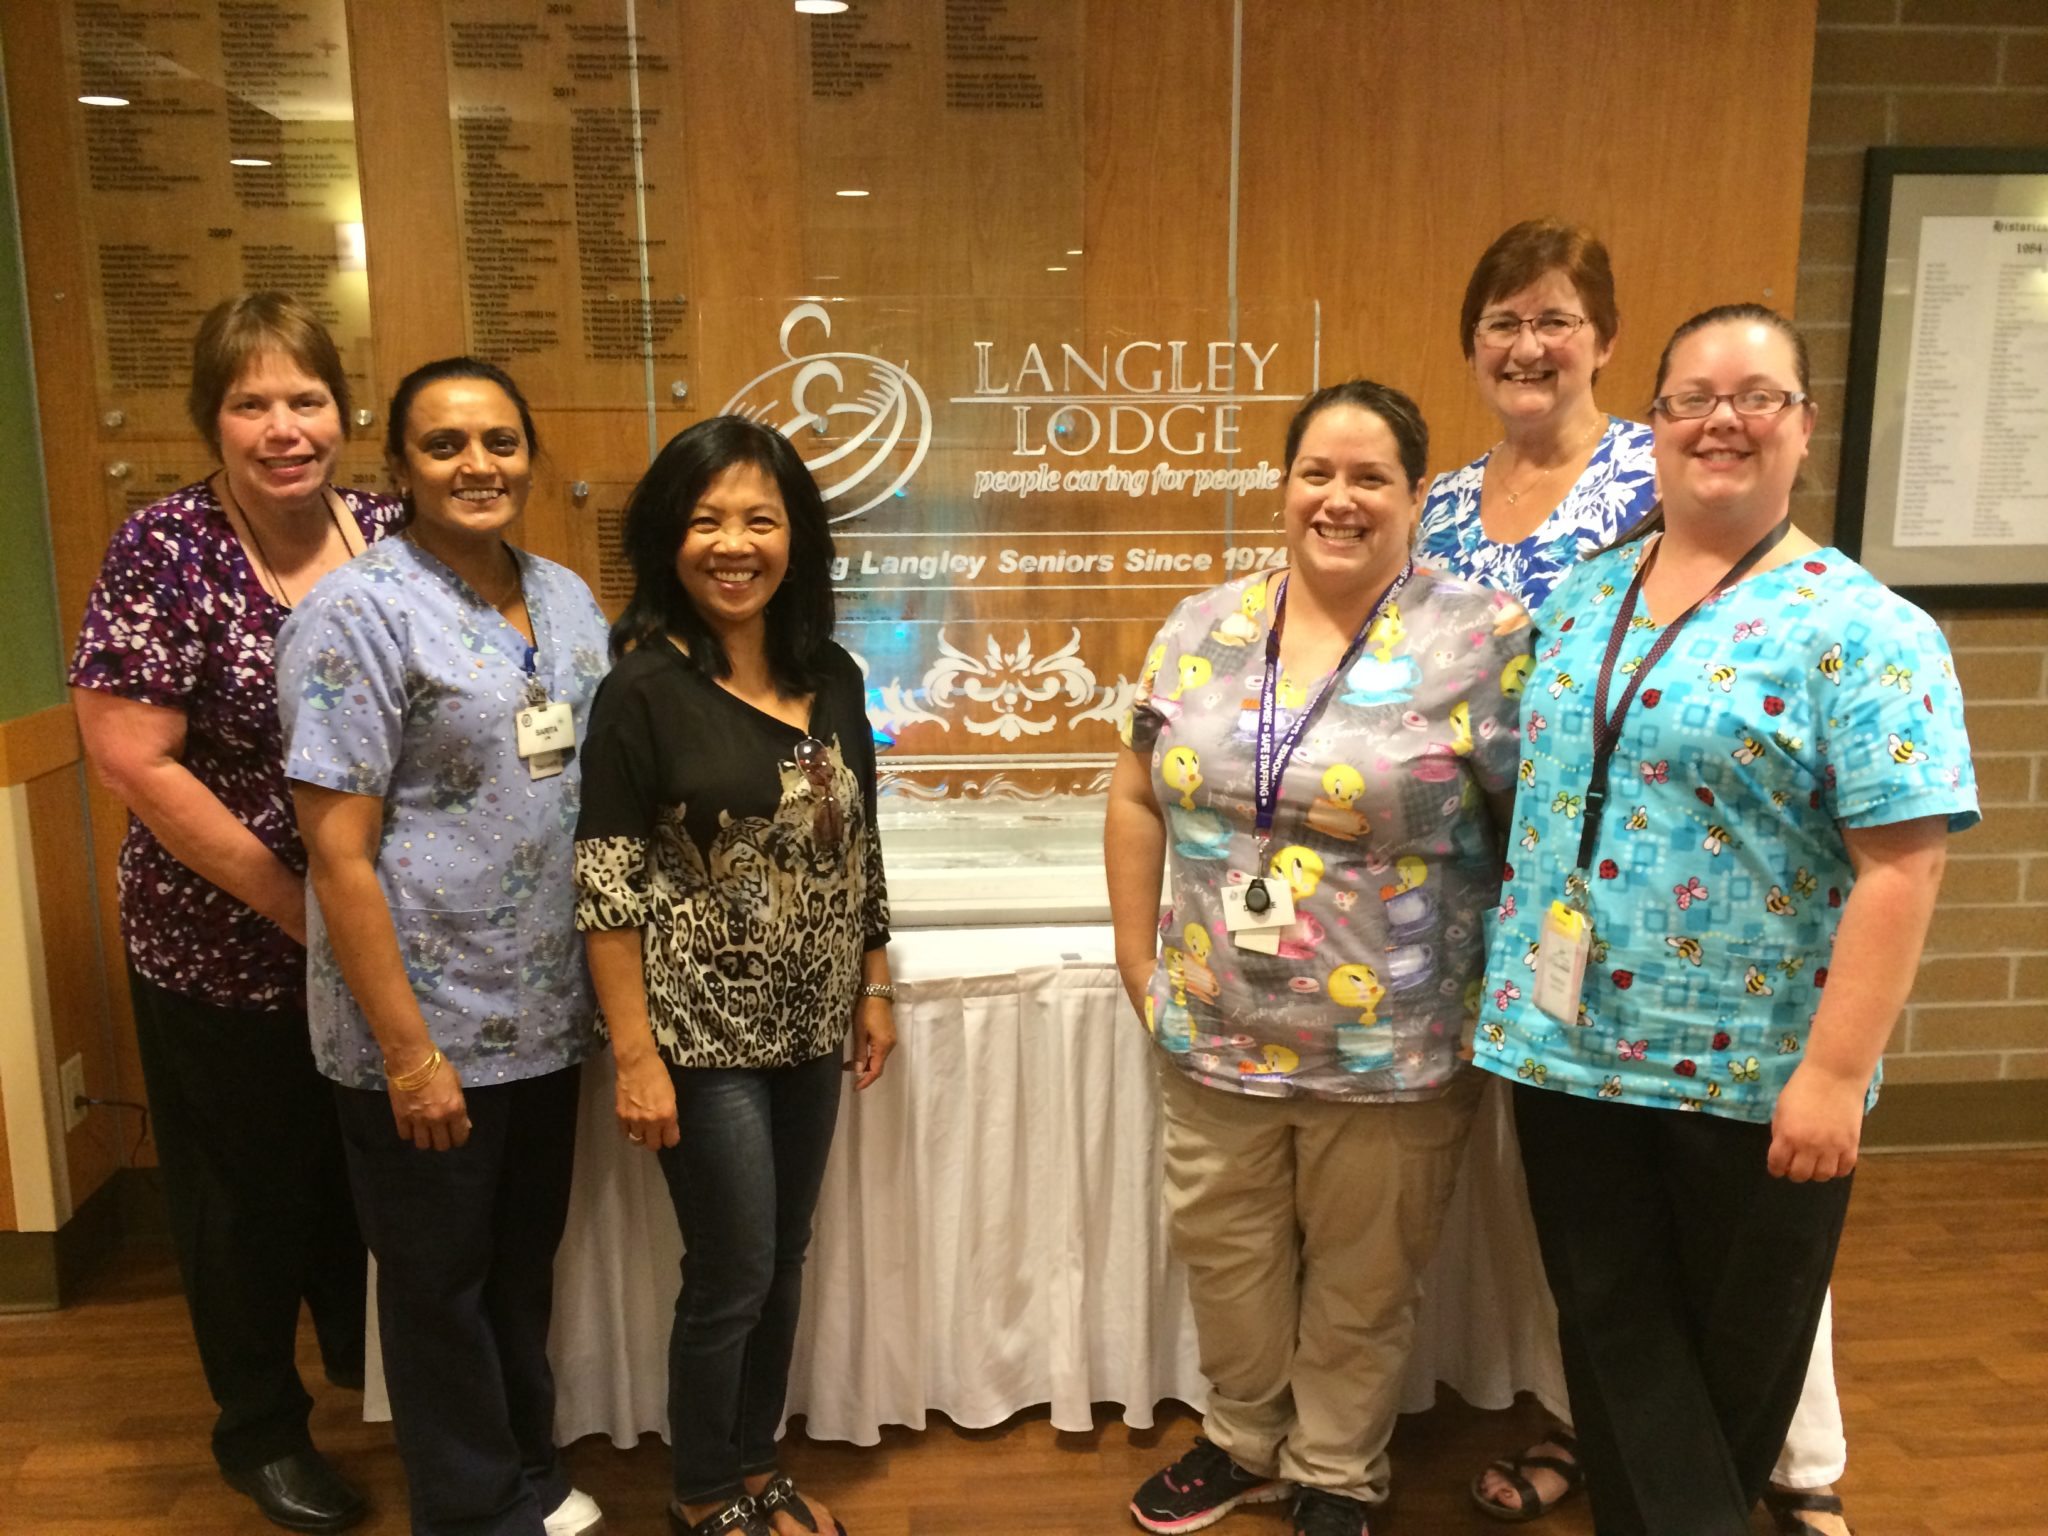 Langley Lodge Celebrates 40 Years of Seniors Care